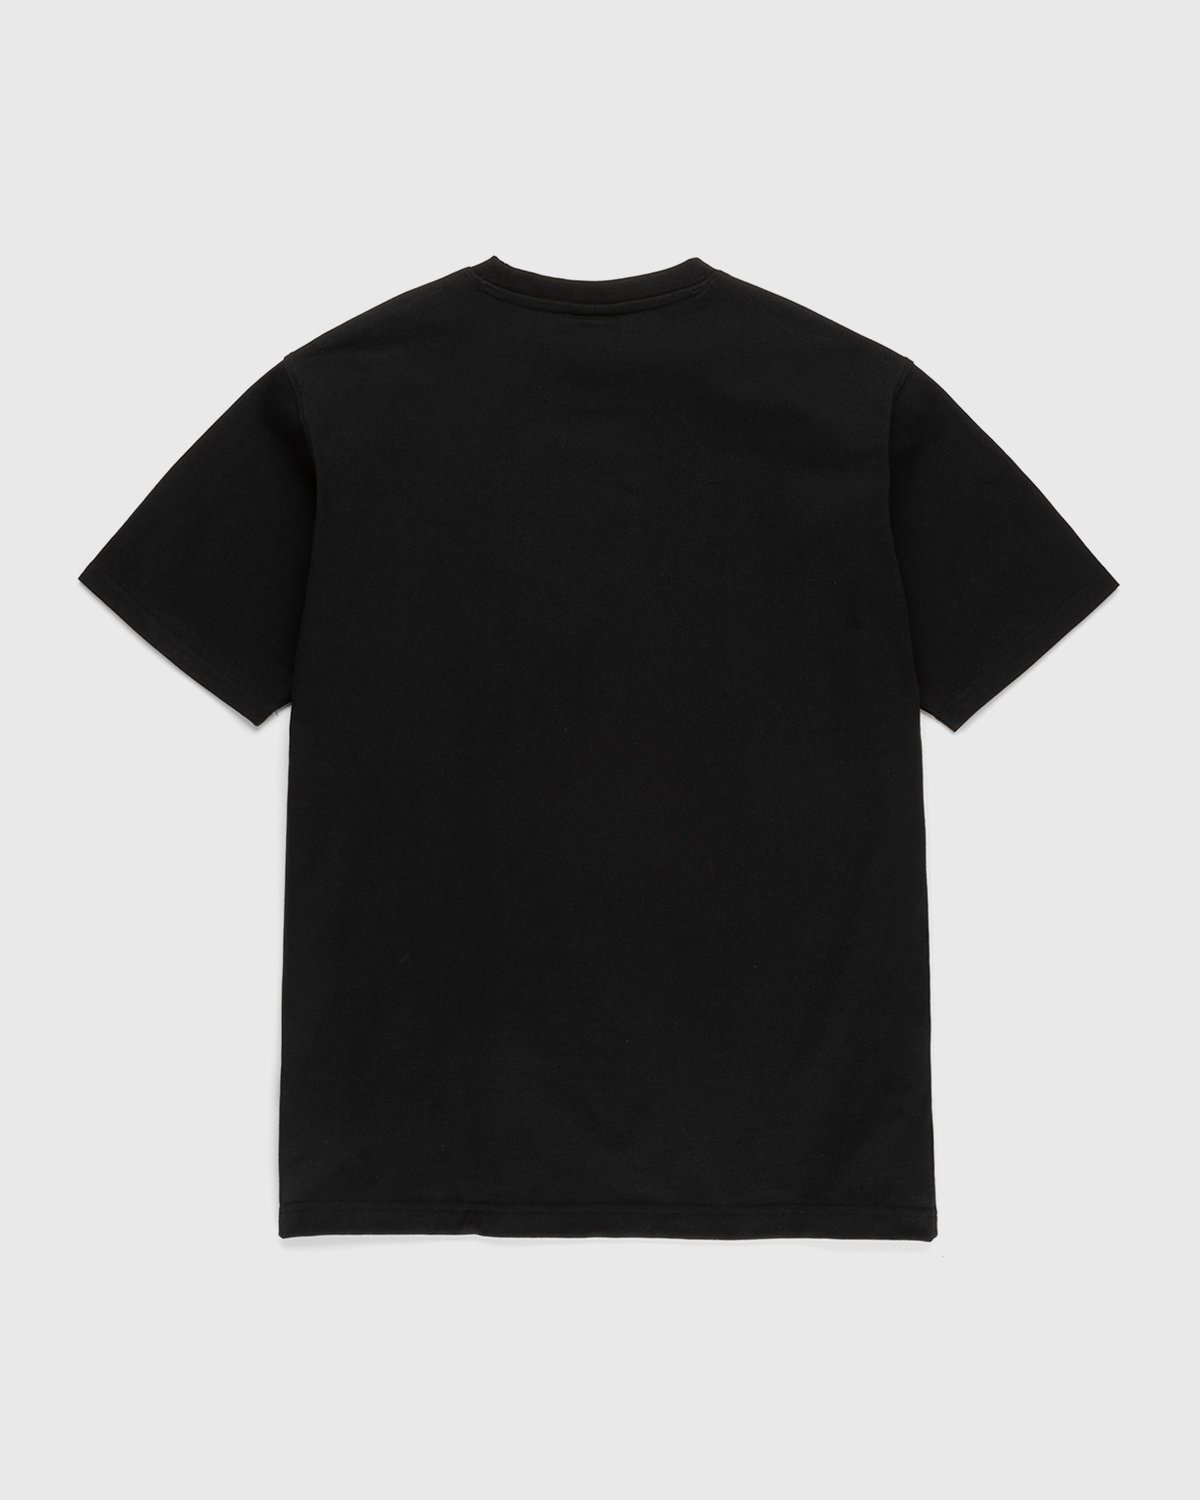 New Balance – Conversations Amongst Us Brand T-Shirt Black - T-shirts - Black - Image 2